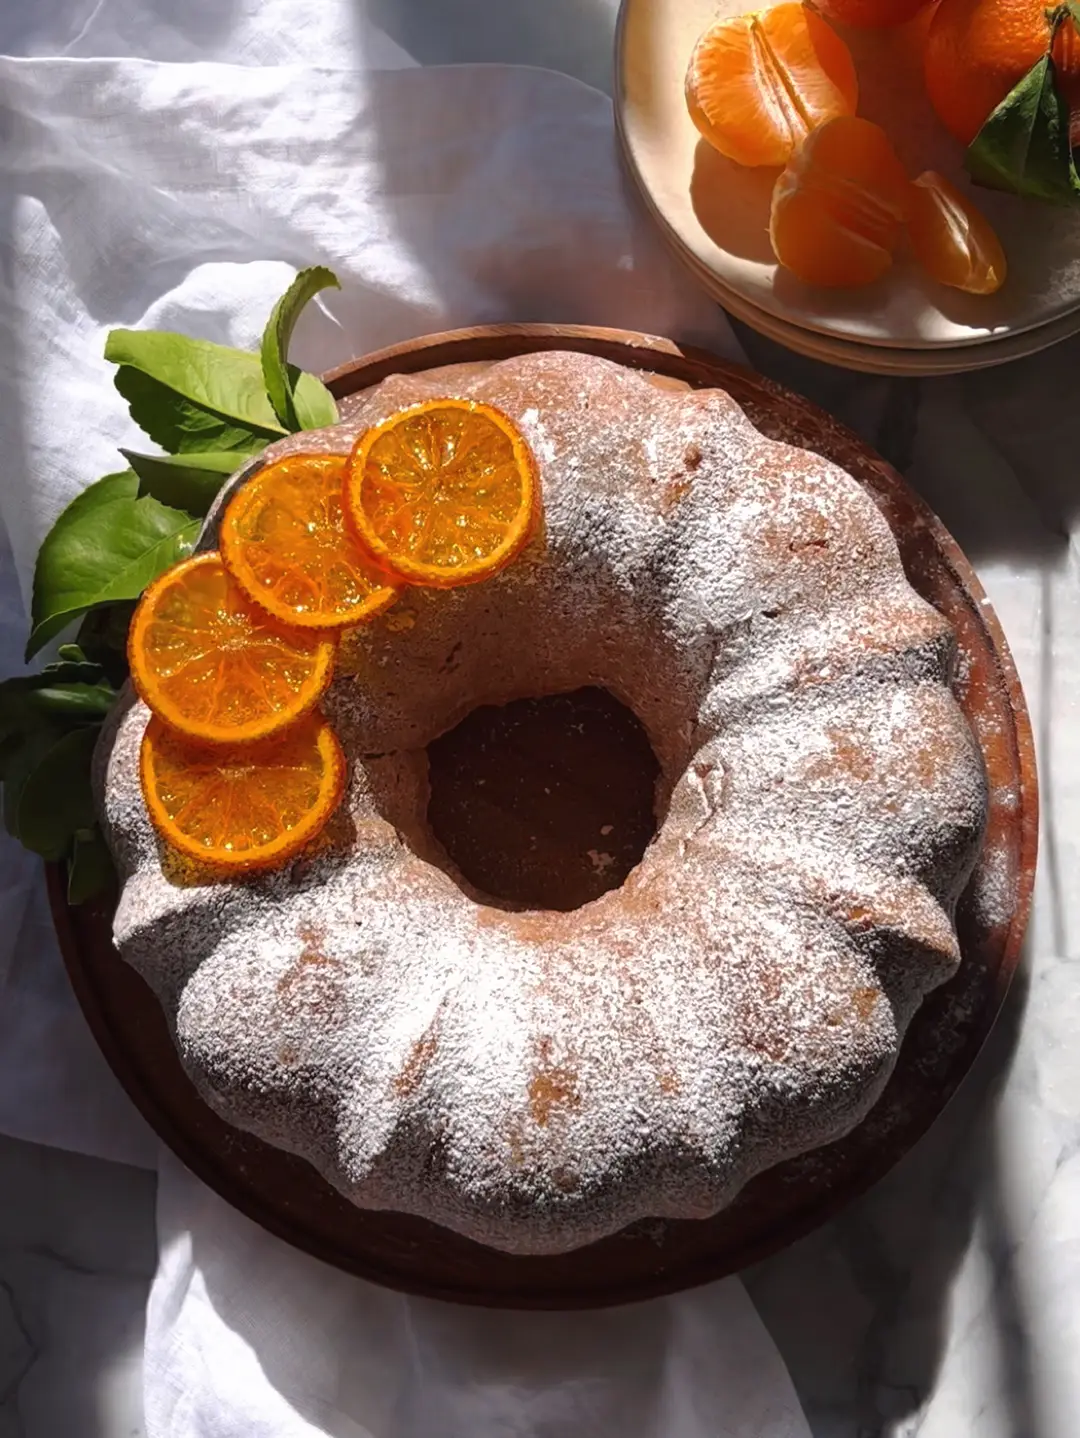 Clementine cake - Wikipedia